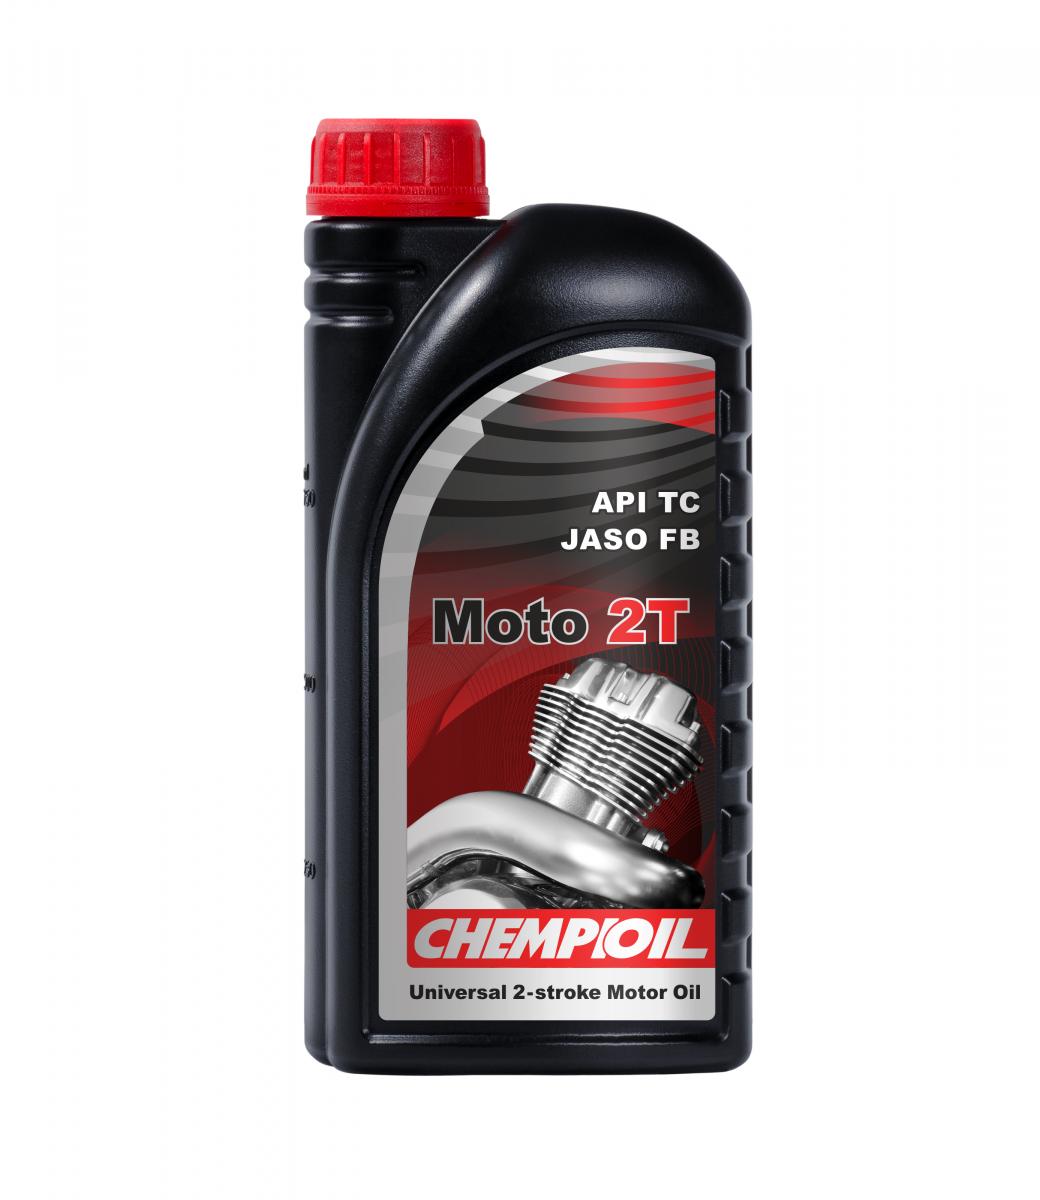 Chempioil MOTO 2T 1L Engine Oil Motorbike Oil 2-Stroke Engine Oil